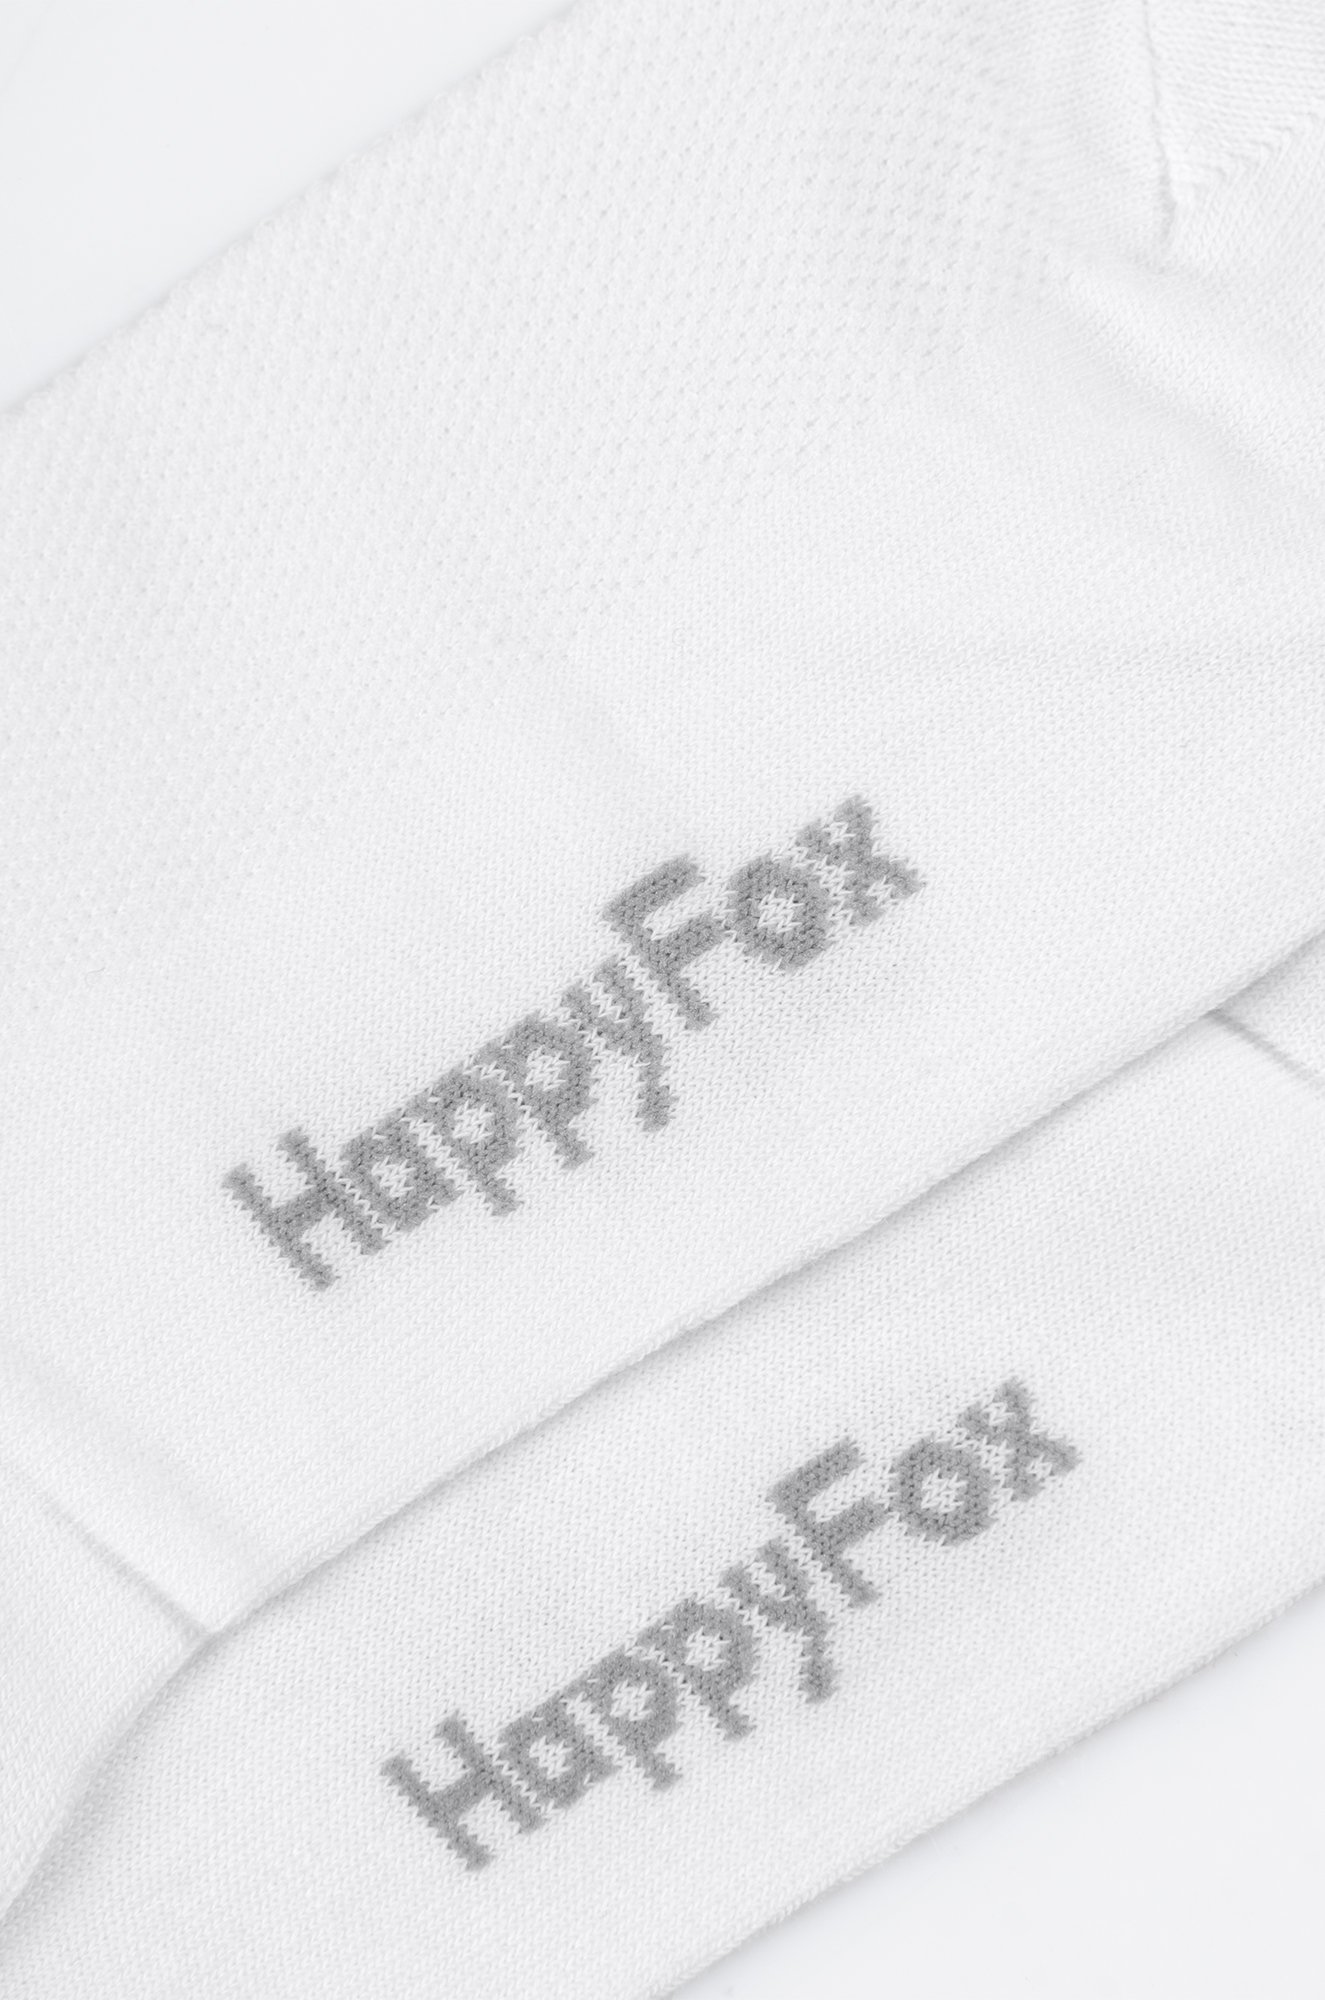 Набор носков в сетку 6 пар Happy Fox